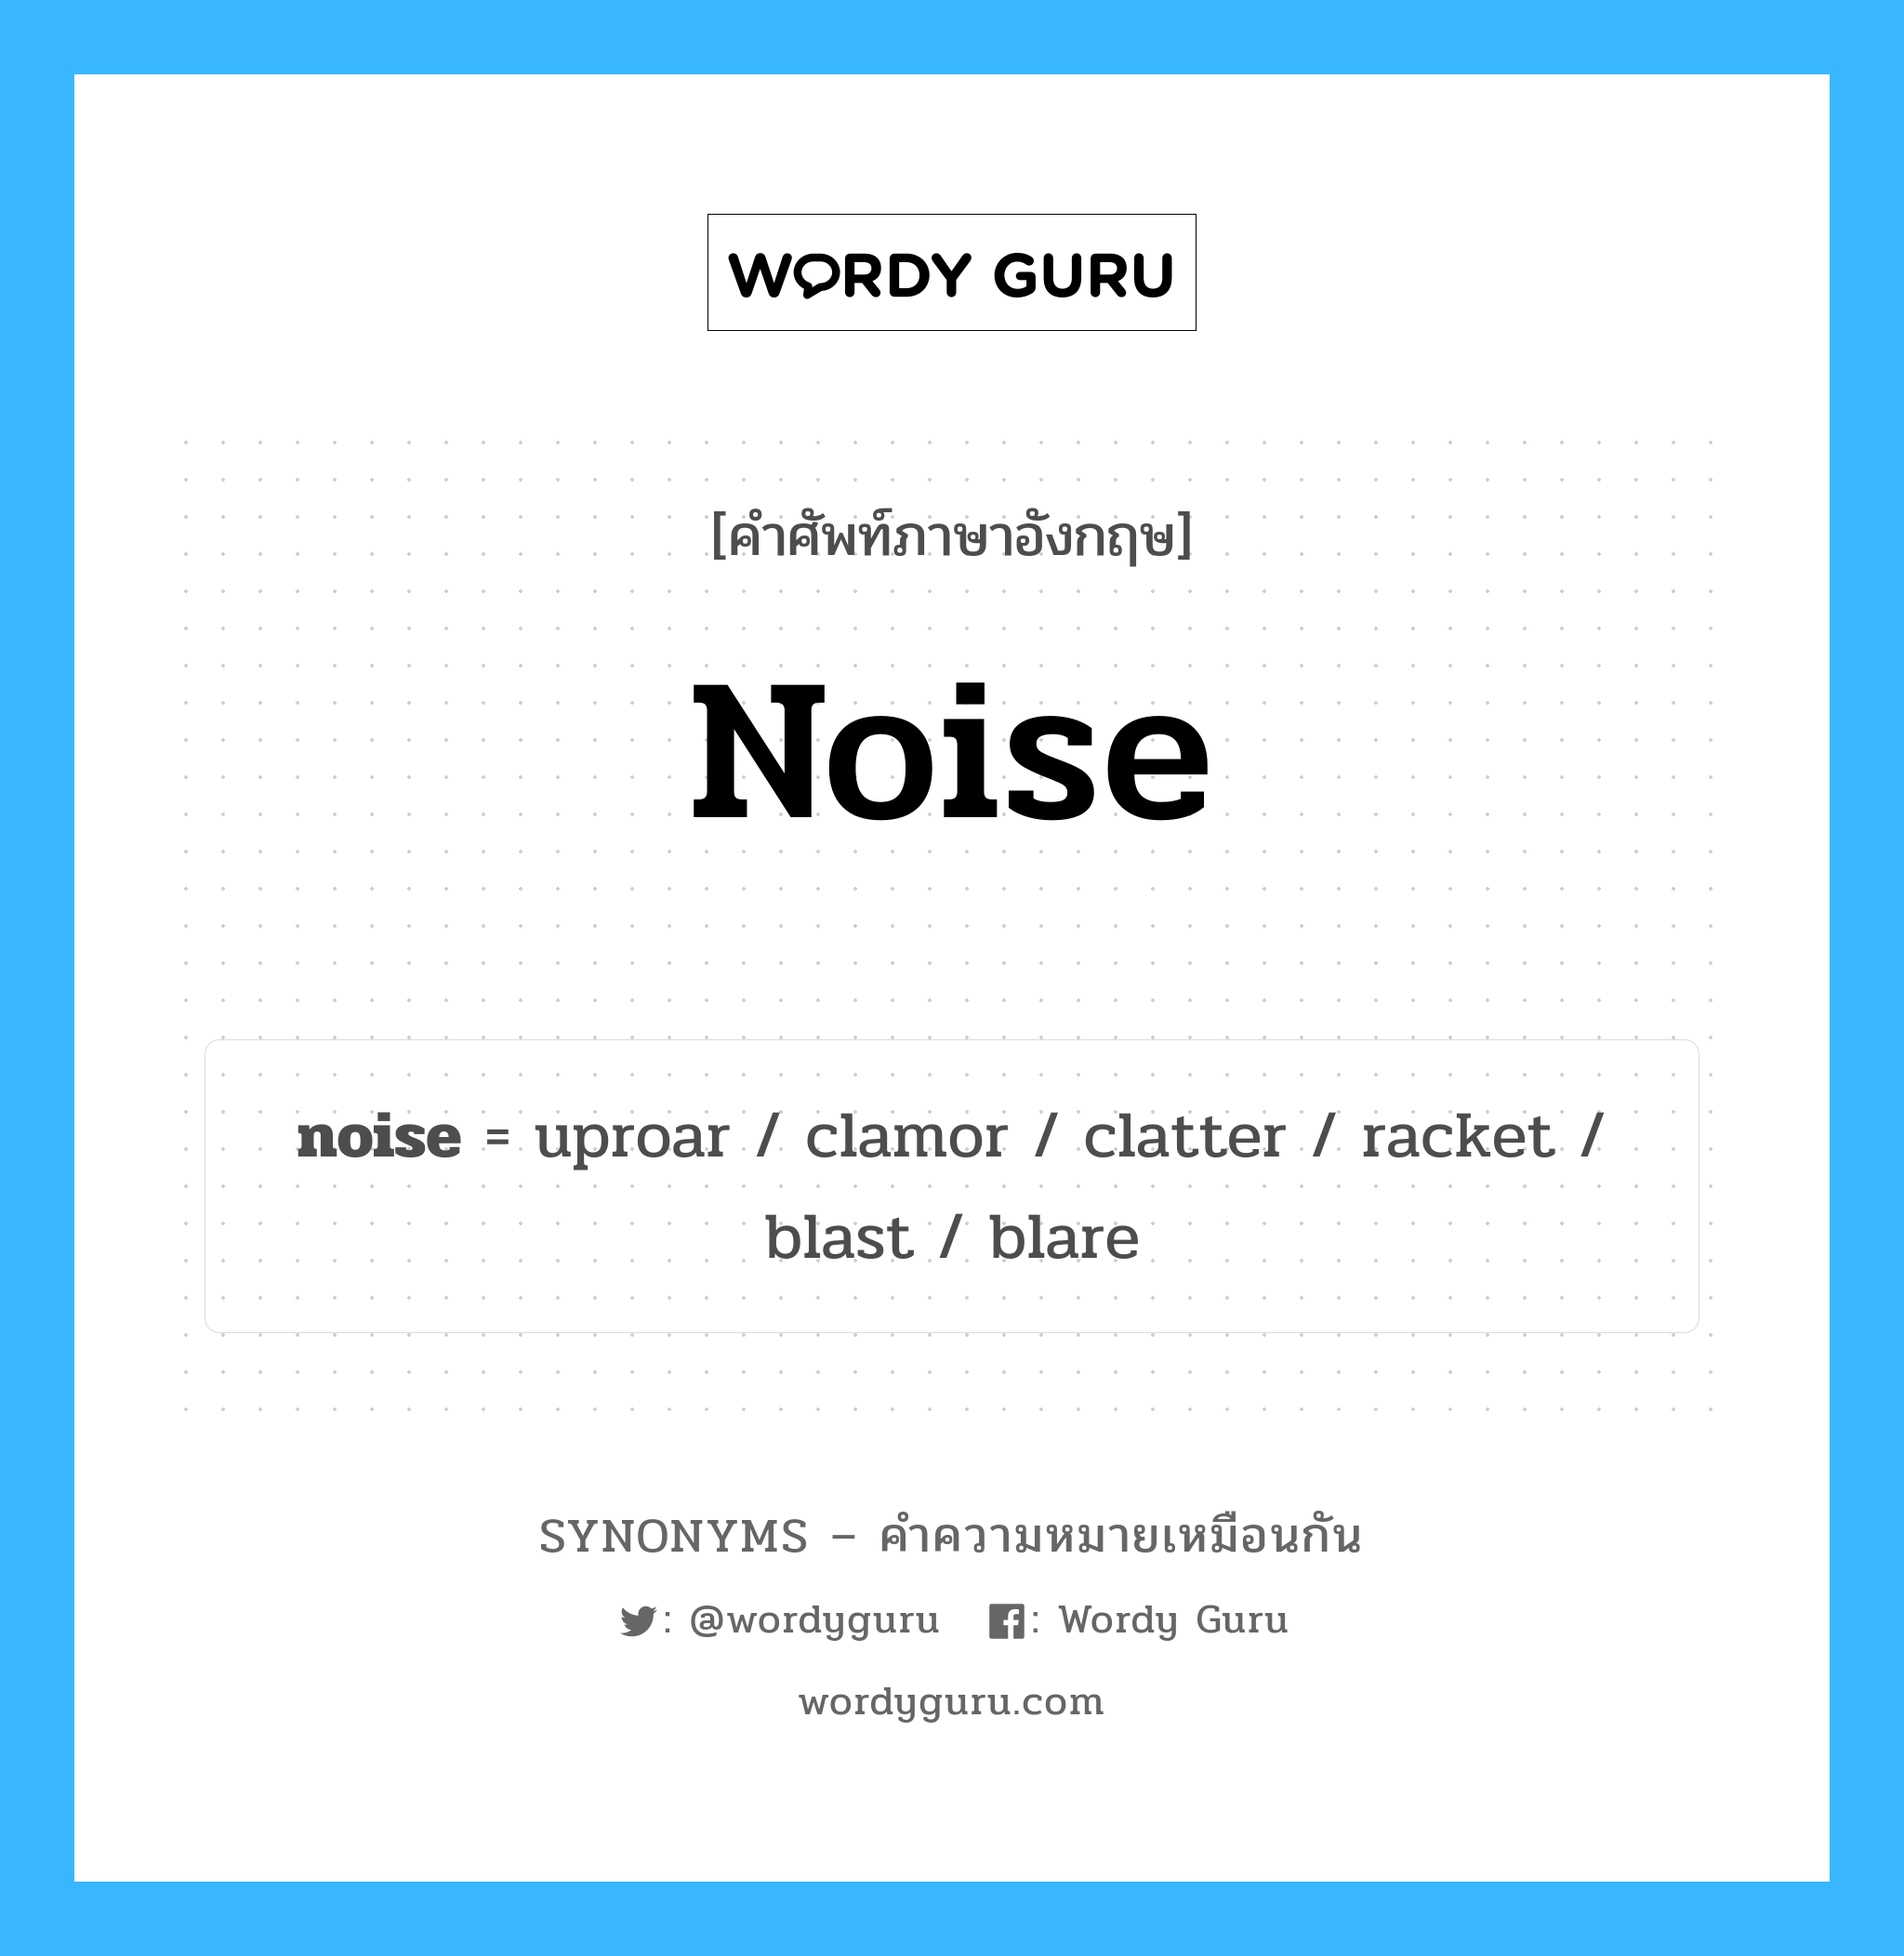 clamor เป็นหนึ่งใน noise และมีคำอื่น ๆ อีกดังนี้, คำศัพท์ภาษาอังกฤษ clamor ความหมายคล้ายกันกับ noise แปลว่า ก้อง หมวด noise